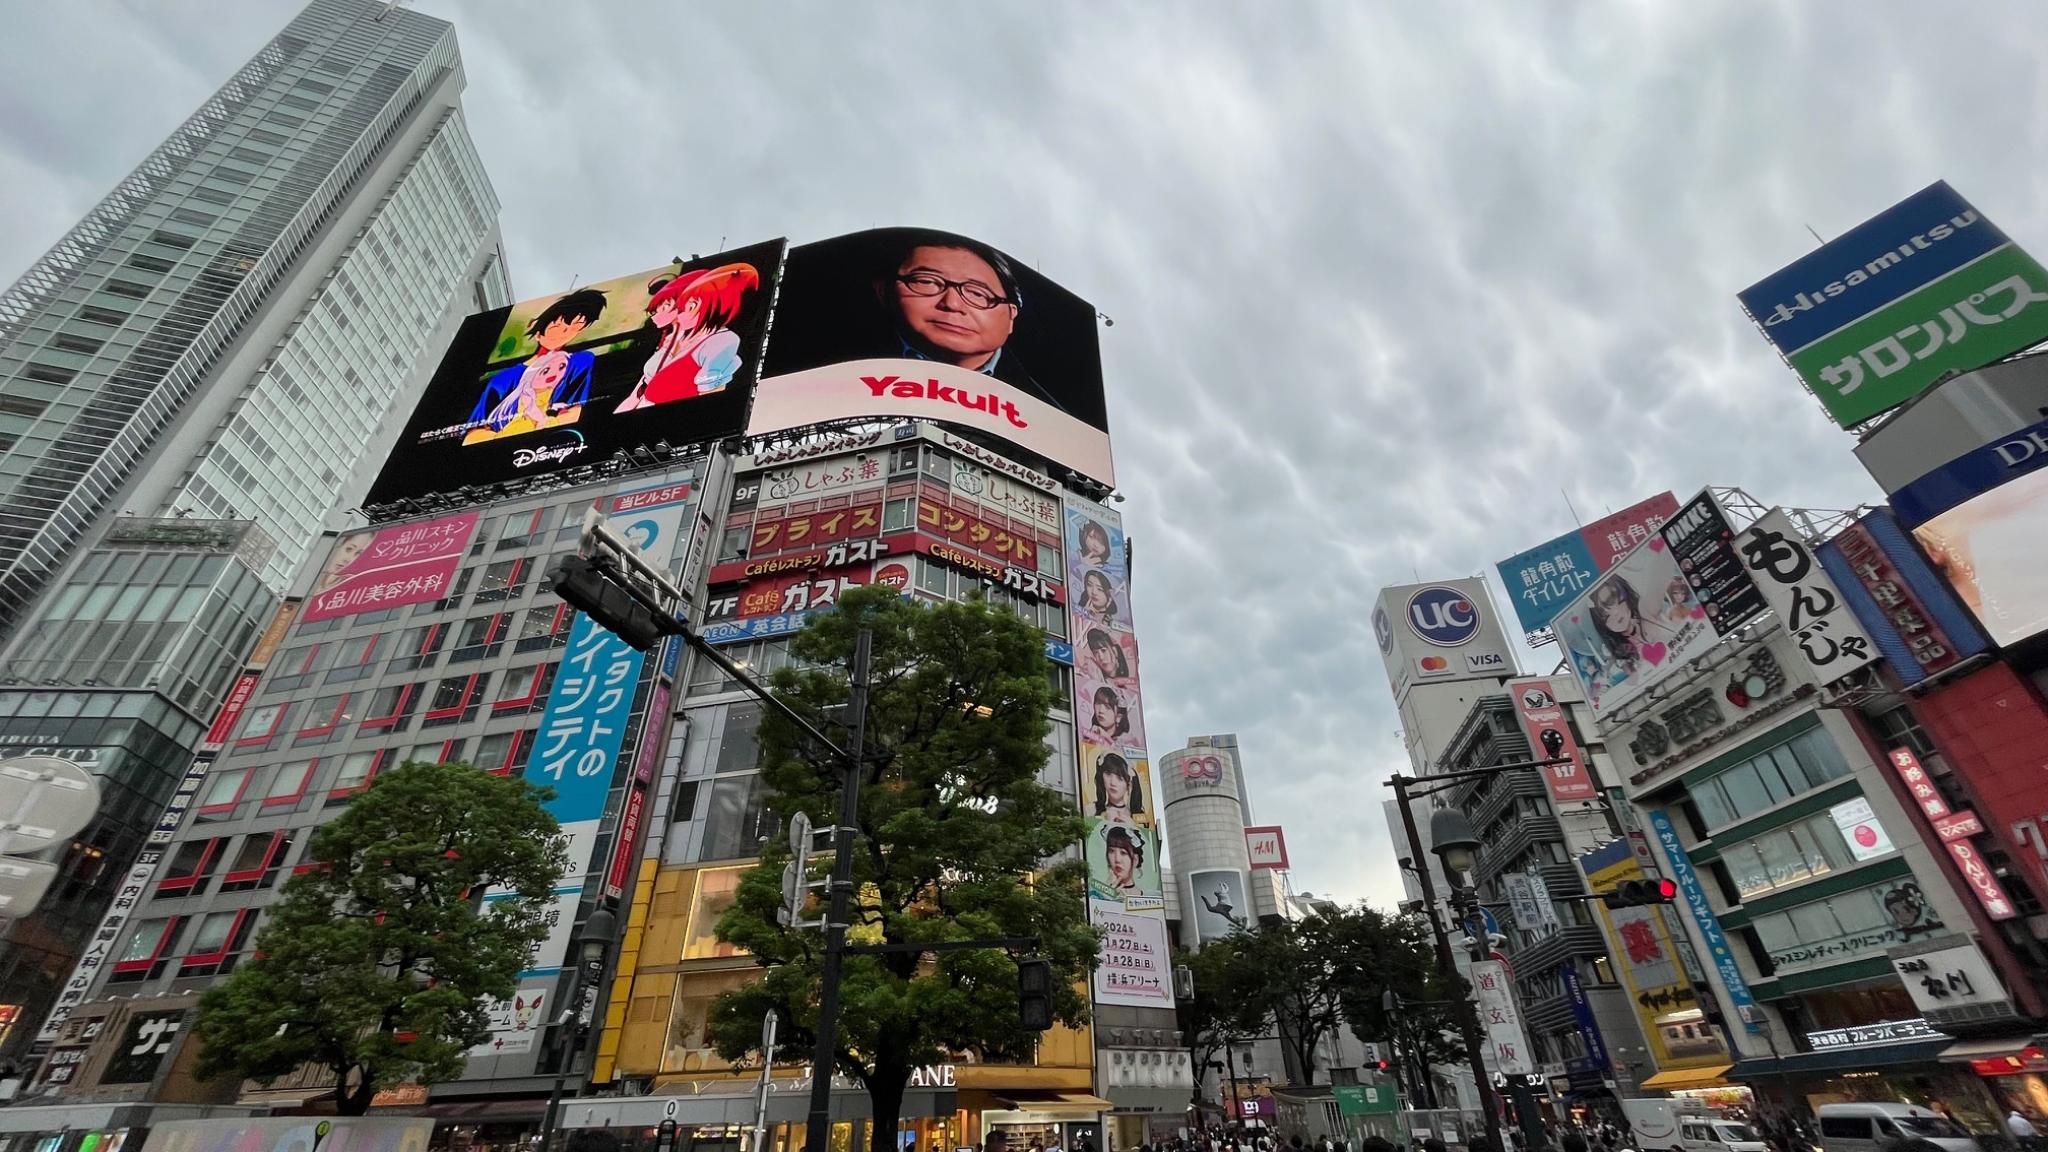 Street view in Shibuya